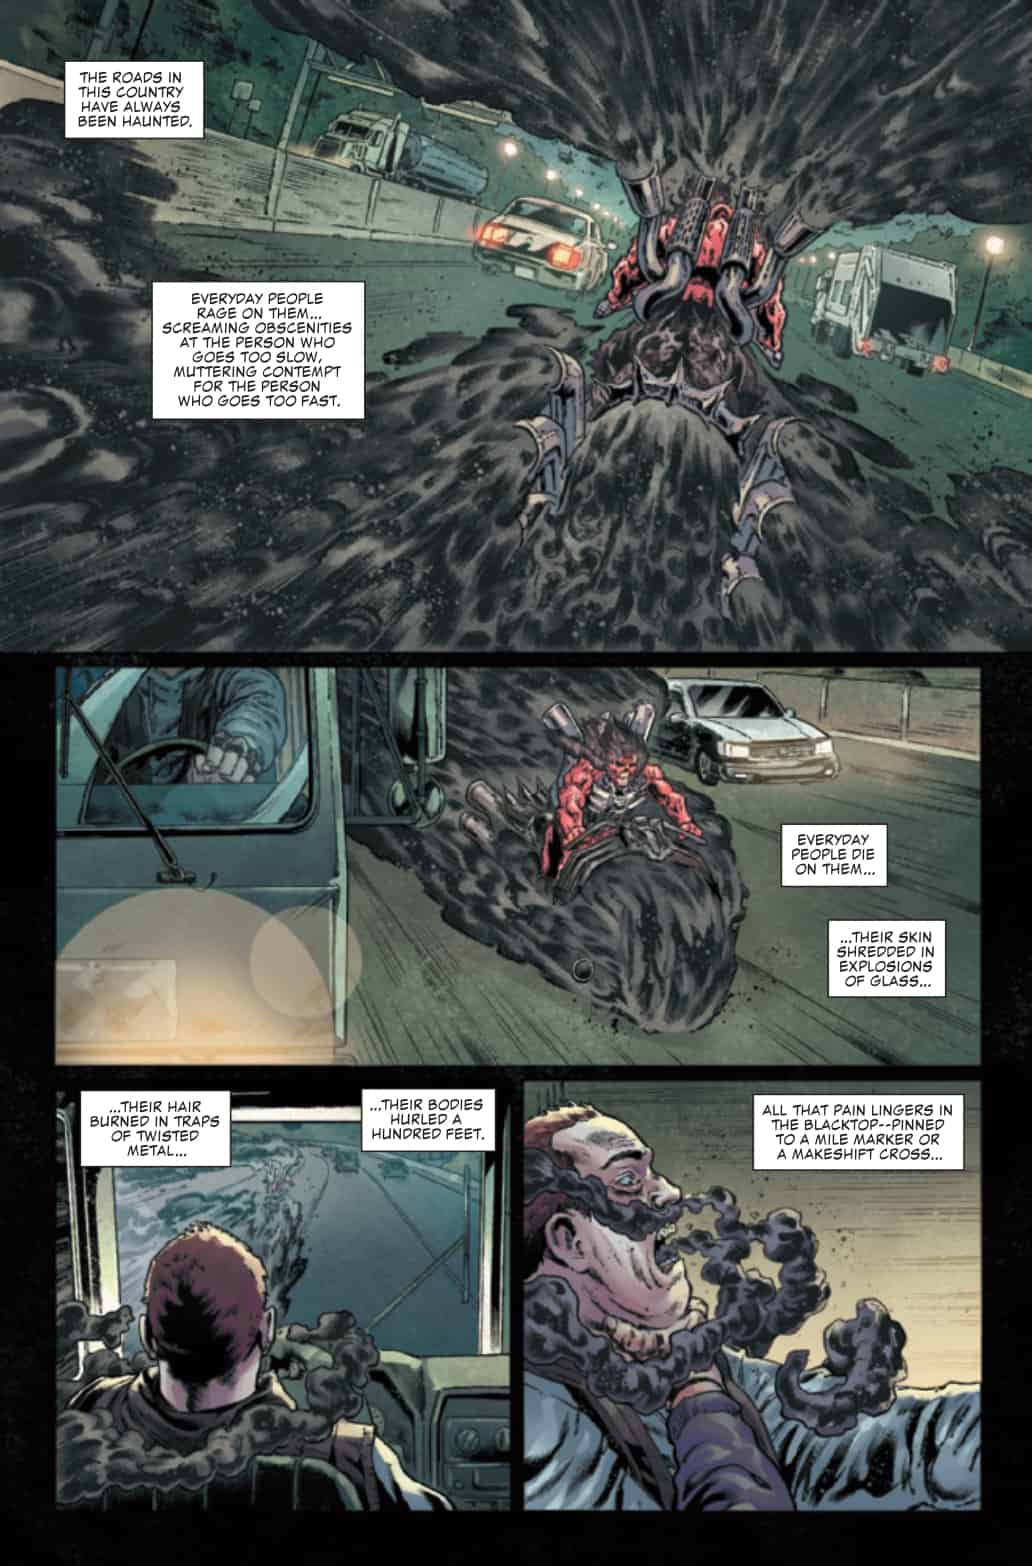 EXHAUST - Marvel Introducing Badass New 'Ghost Rider' Villain This